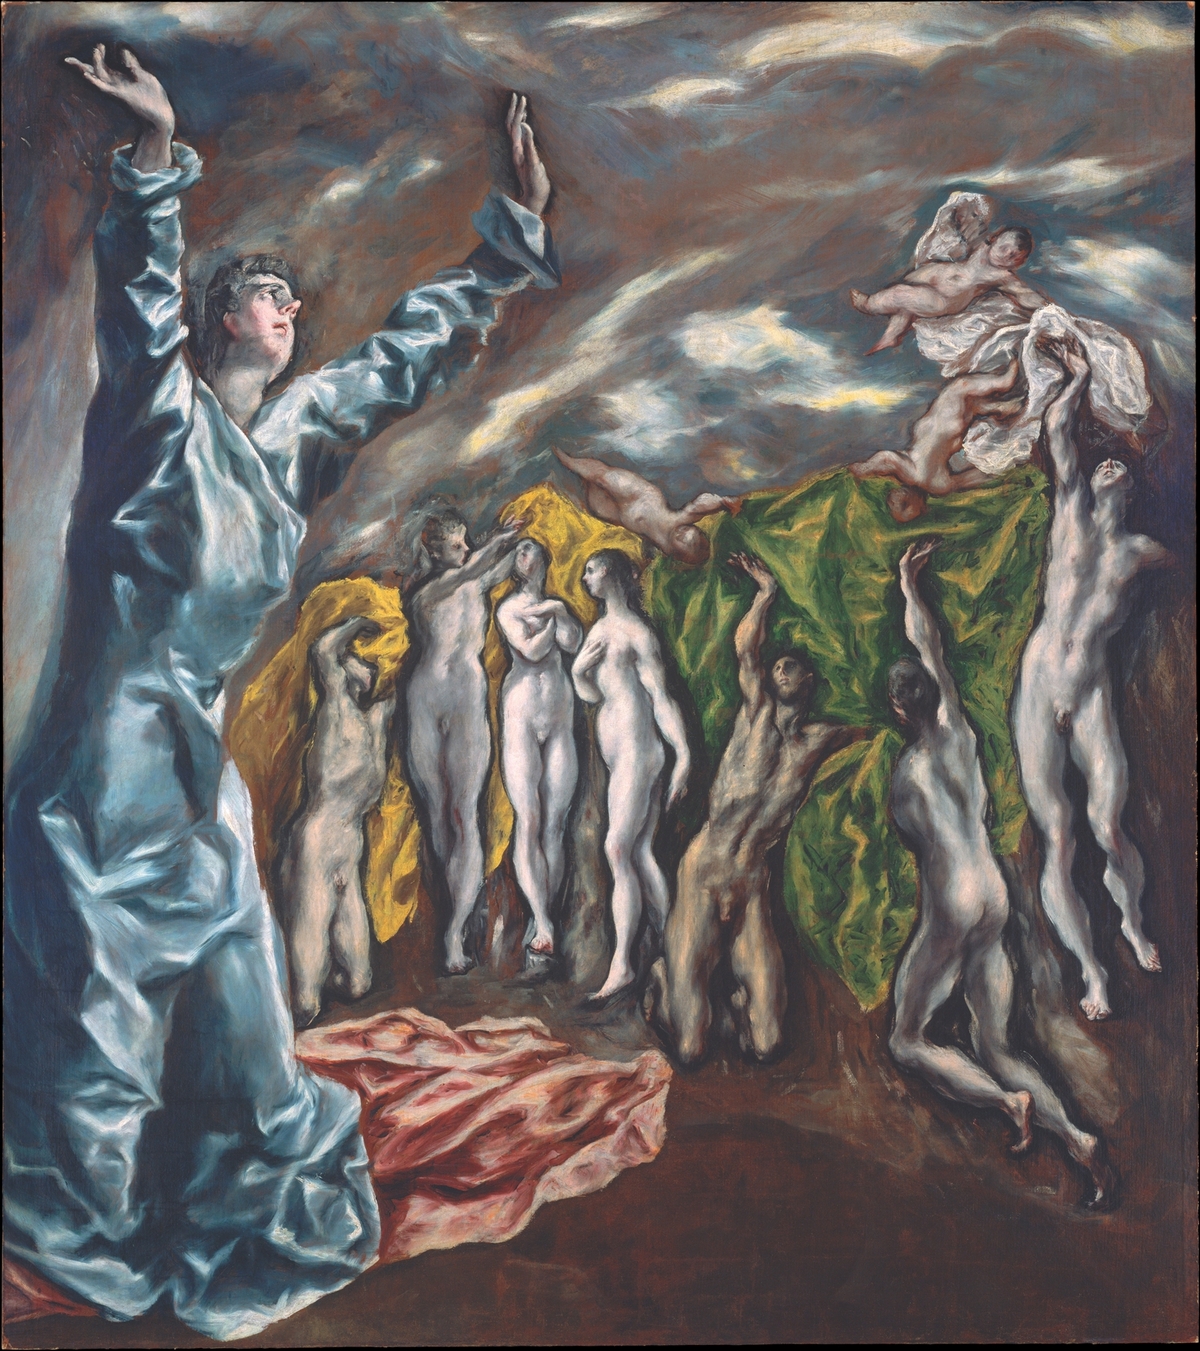 The Vision of Saint John / El Greco (Domenikos Theotokopoulos) / 1608–14